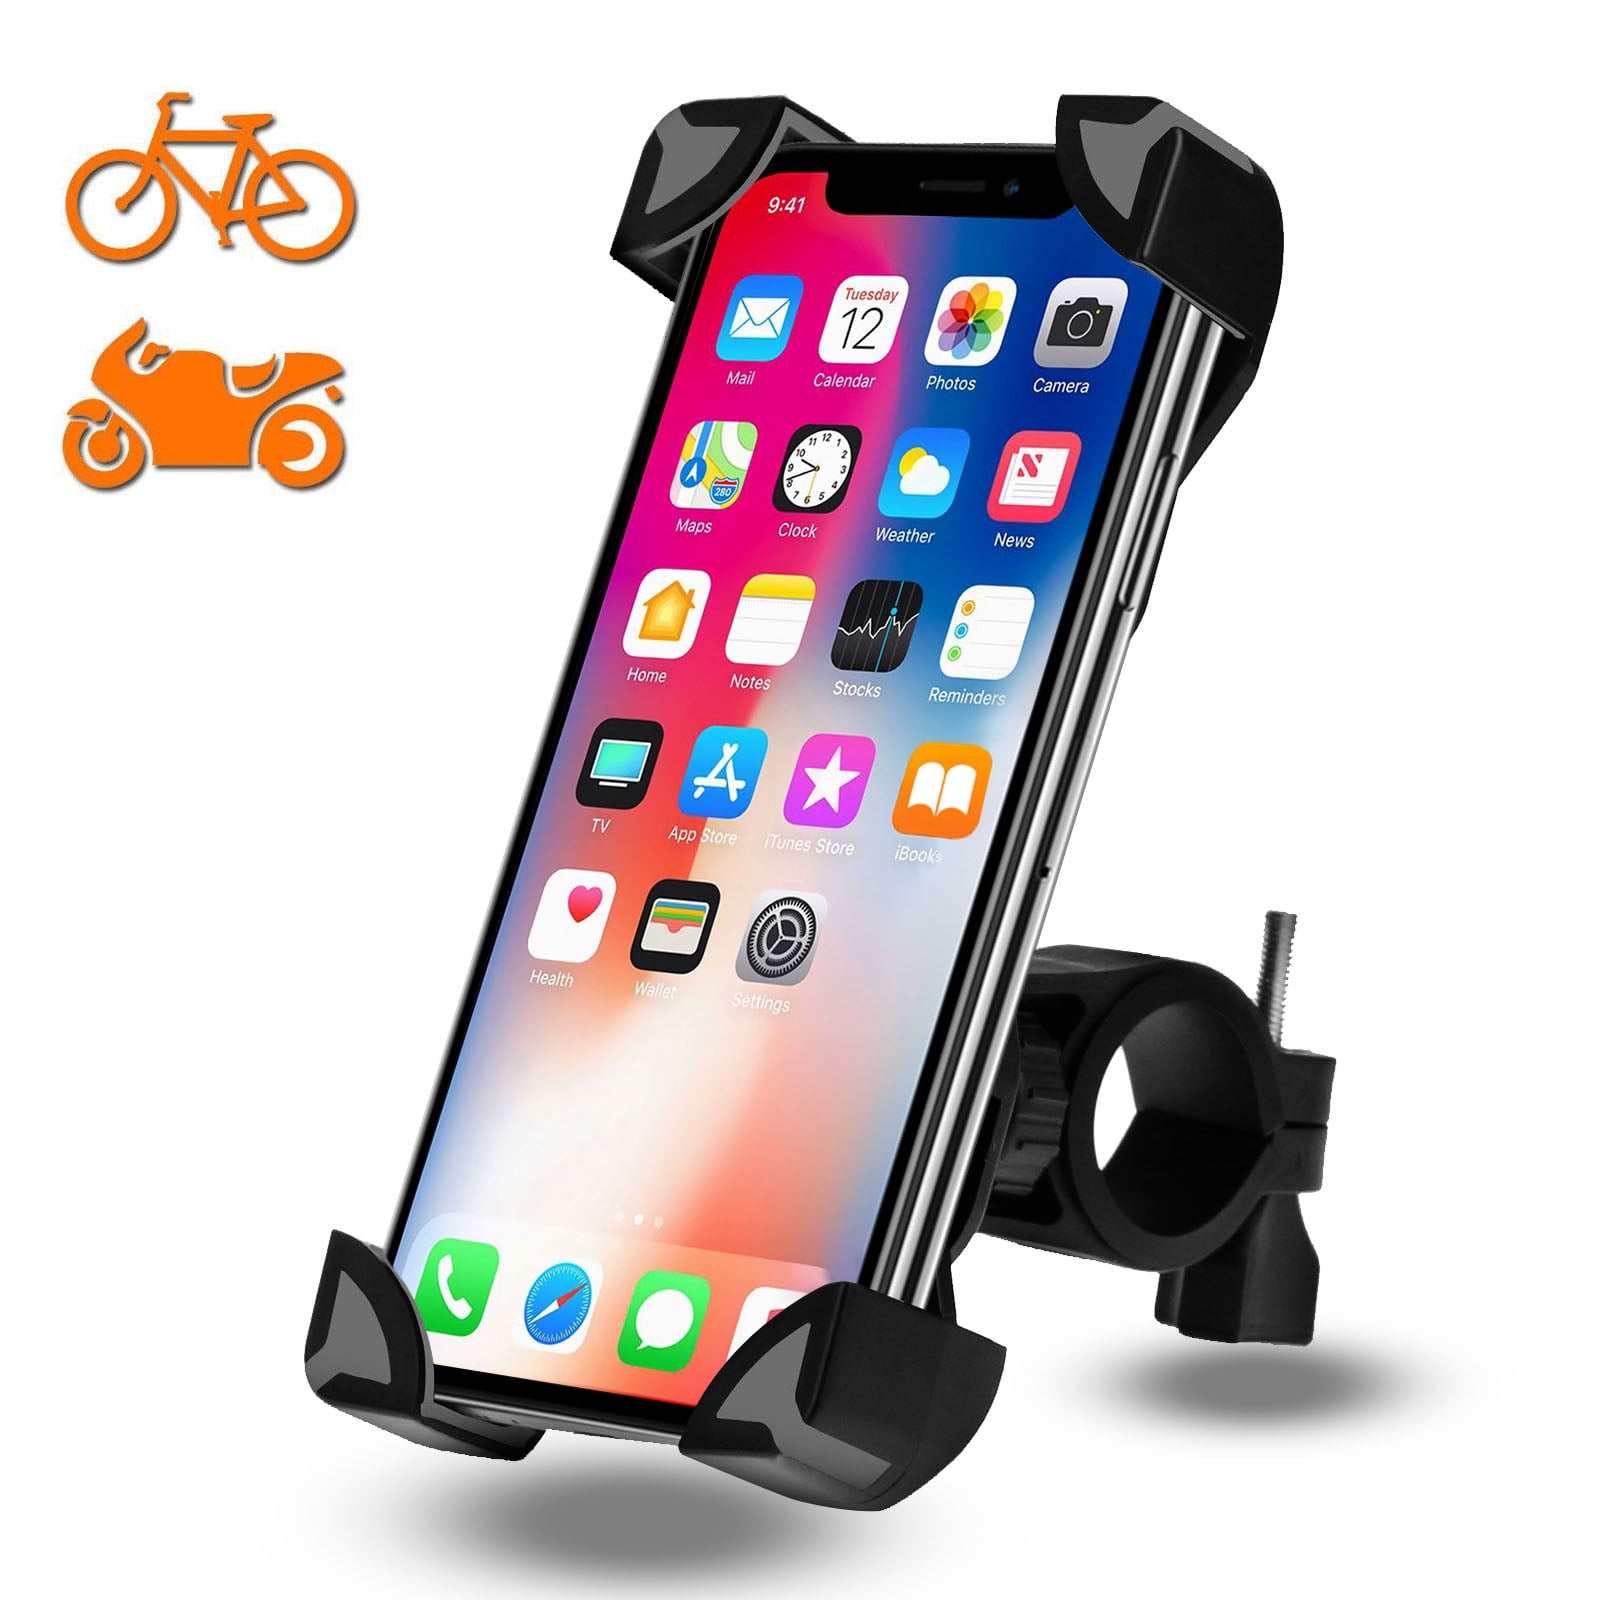 Bovon 360°Rotation Aluminum Alloy Bicycle Phone Holder Black 6/6s Plus 3.5-6.2 Universal Motorcycle Handlebar Rack Fits iPhone X Bike Phone Mount S8/S8 Plus 8/8 Plus 7 Galaxy S9/S9 Plus 